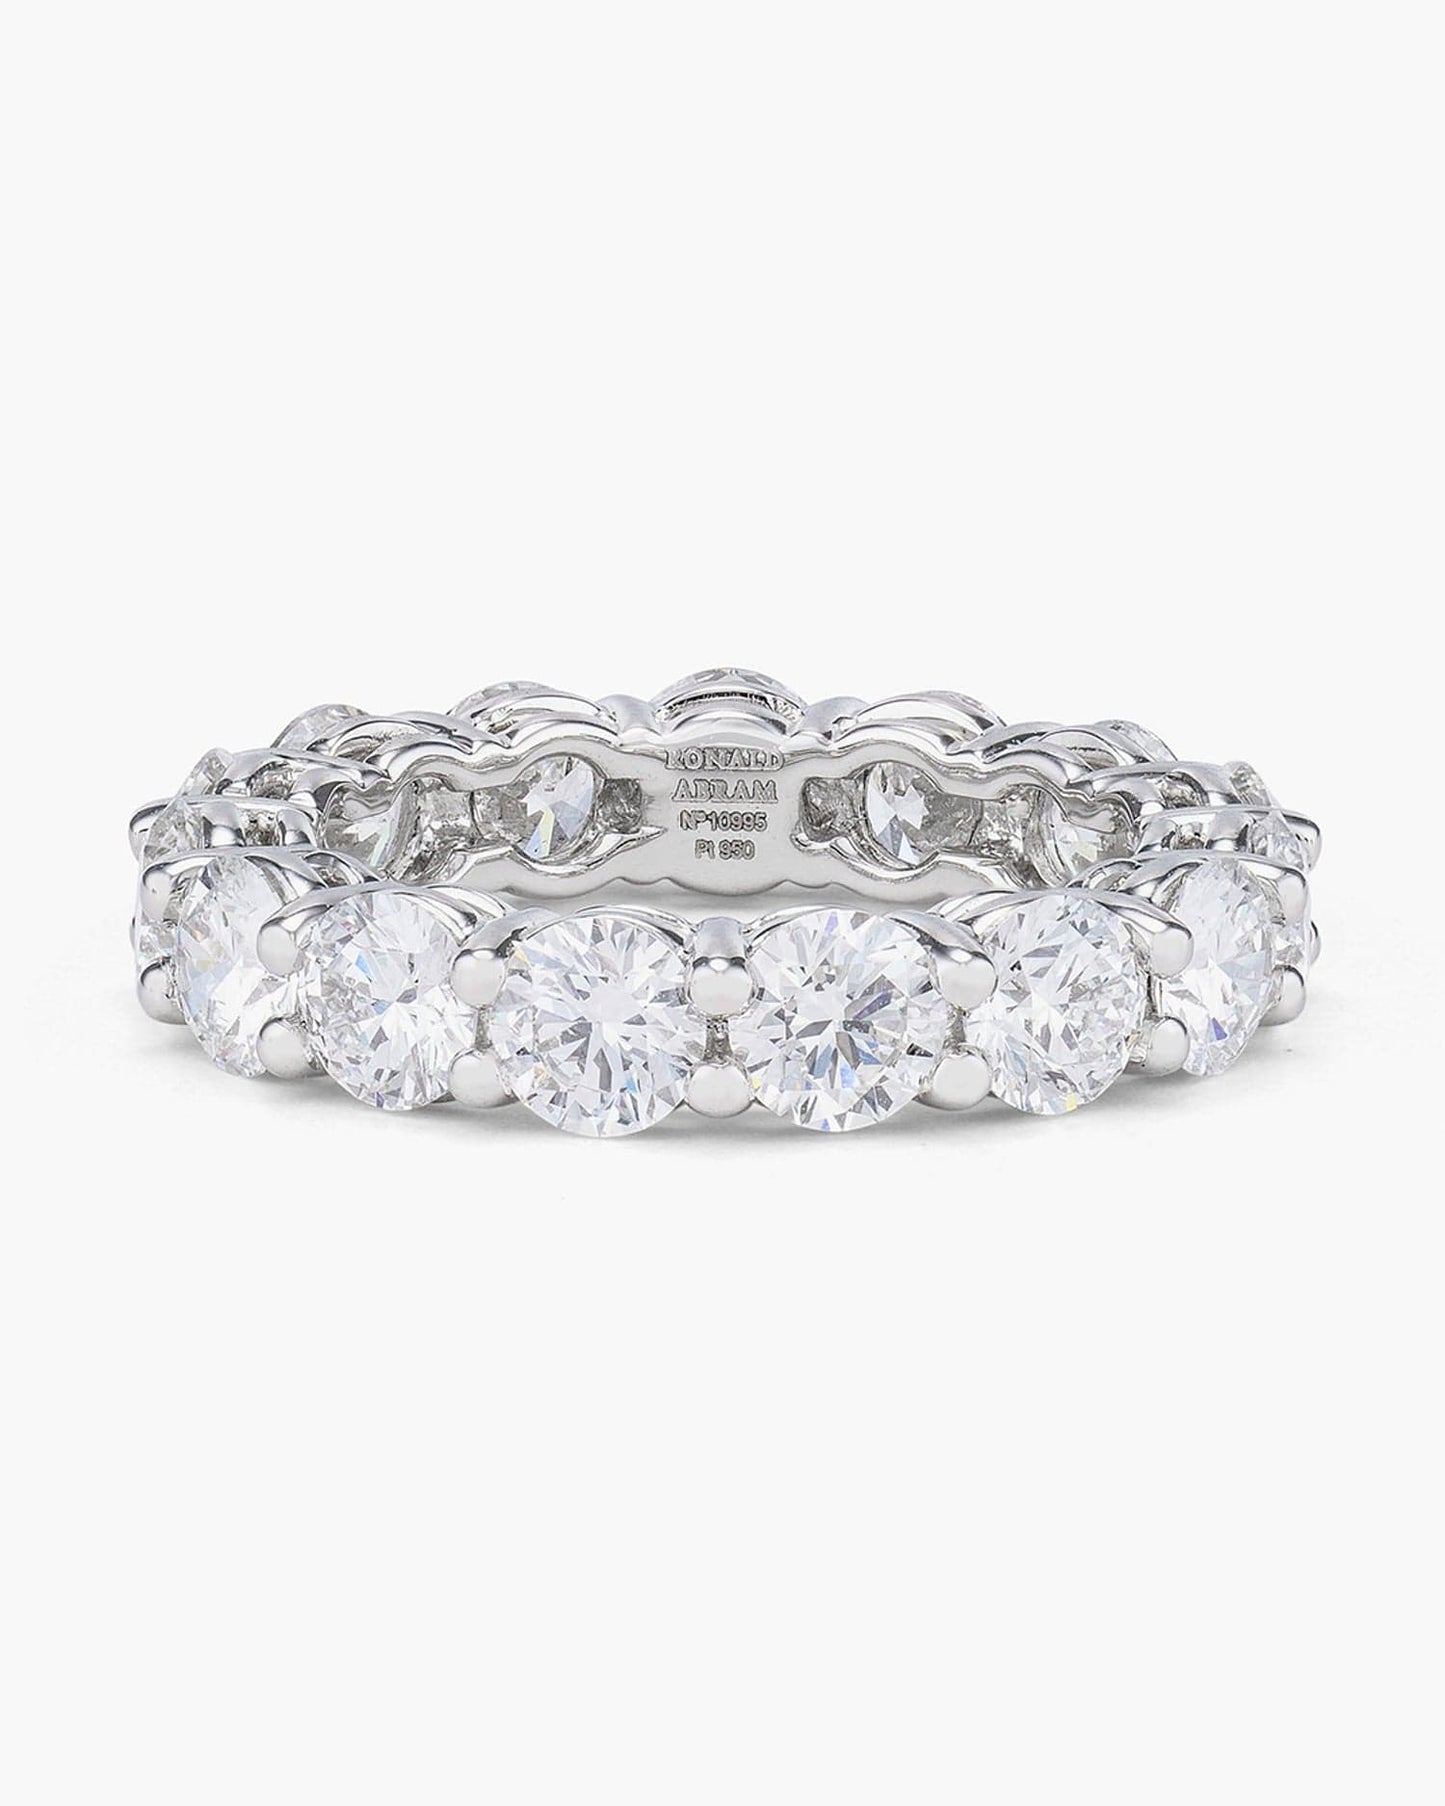 Round Brilliant Cut Diamond Eternity Ring (0.23 carat)